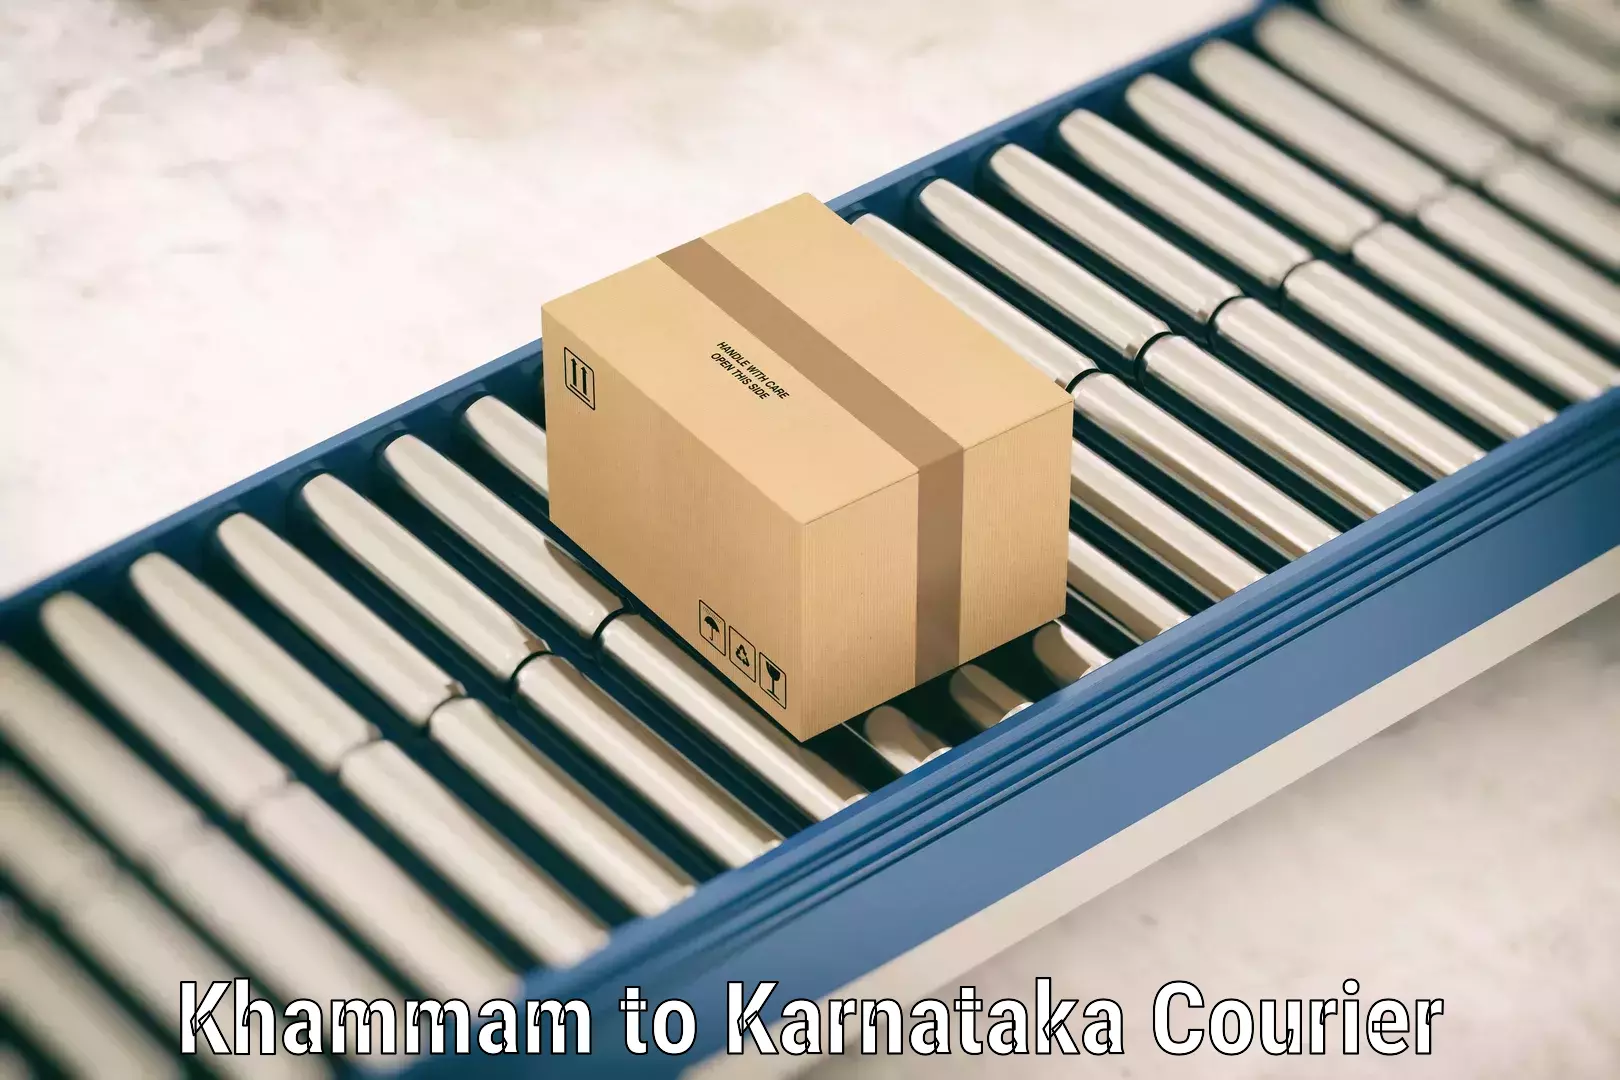 Luggage delivery app Khammam to Hubli